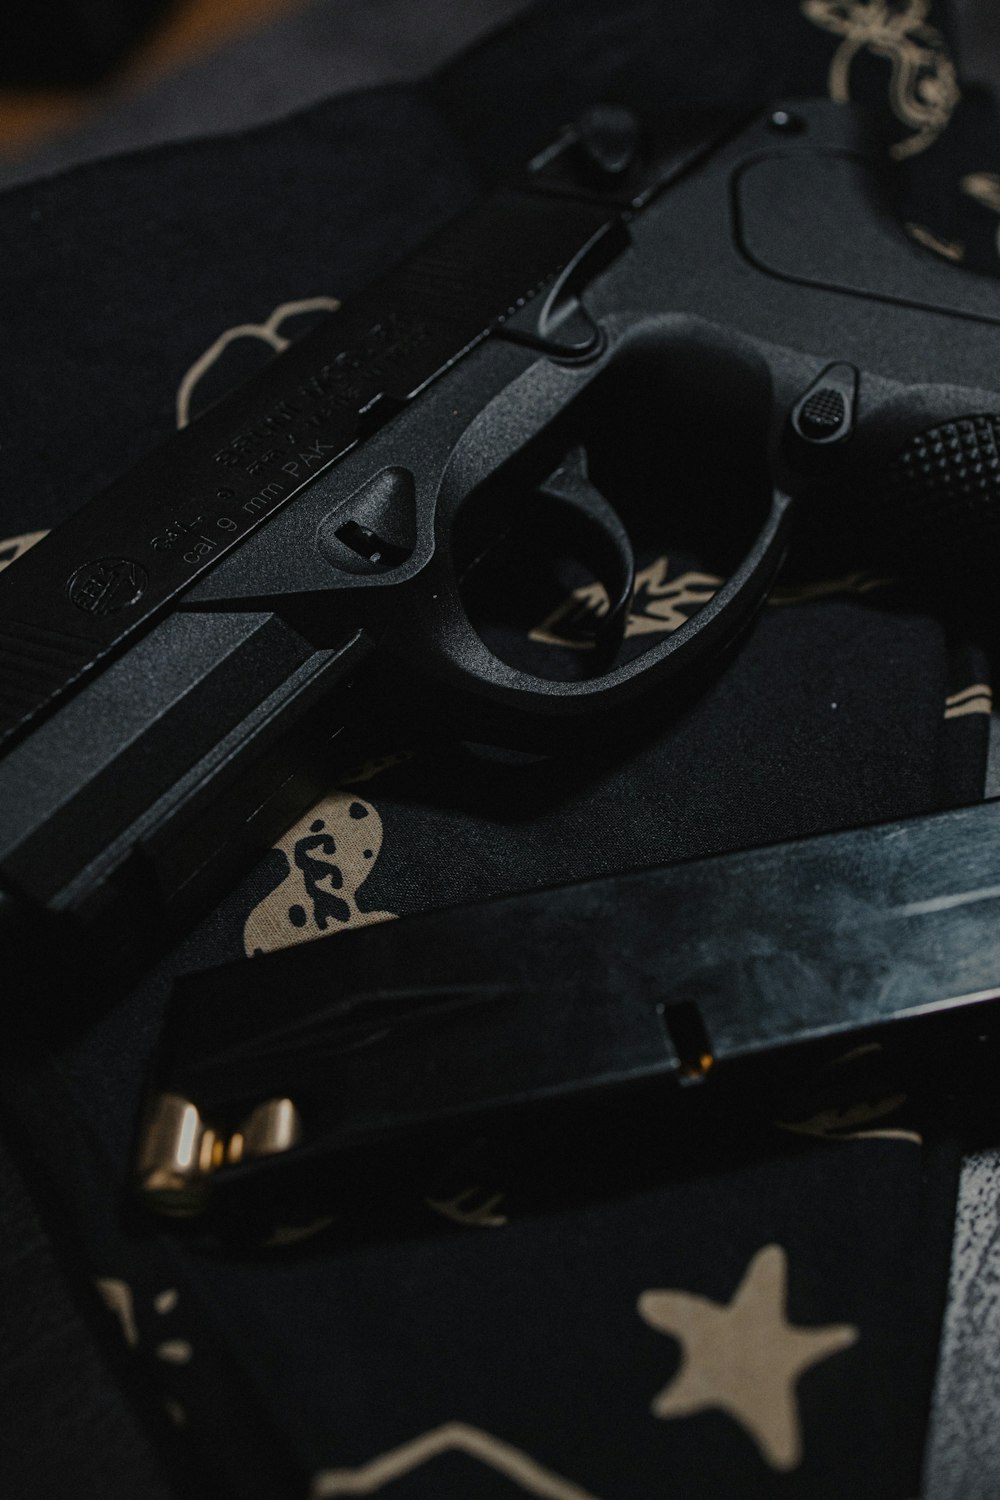 black semi automatic pistol on black case